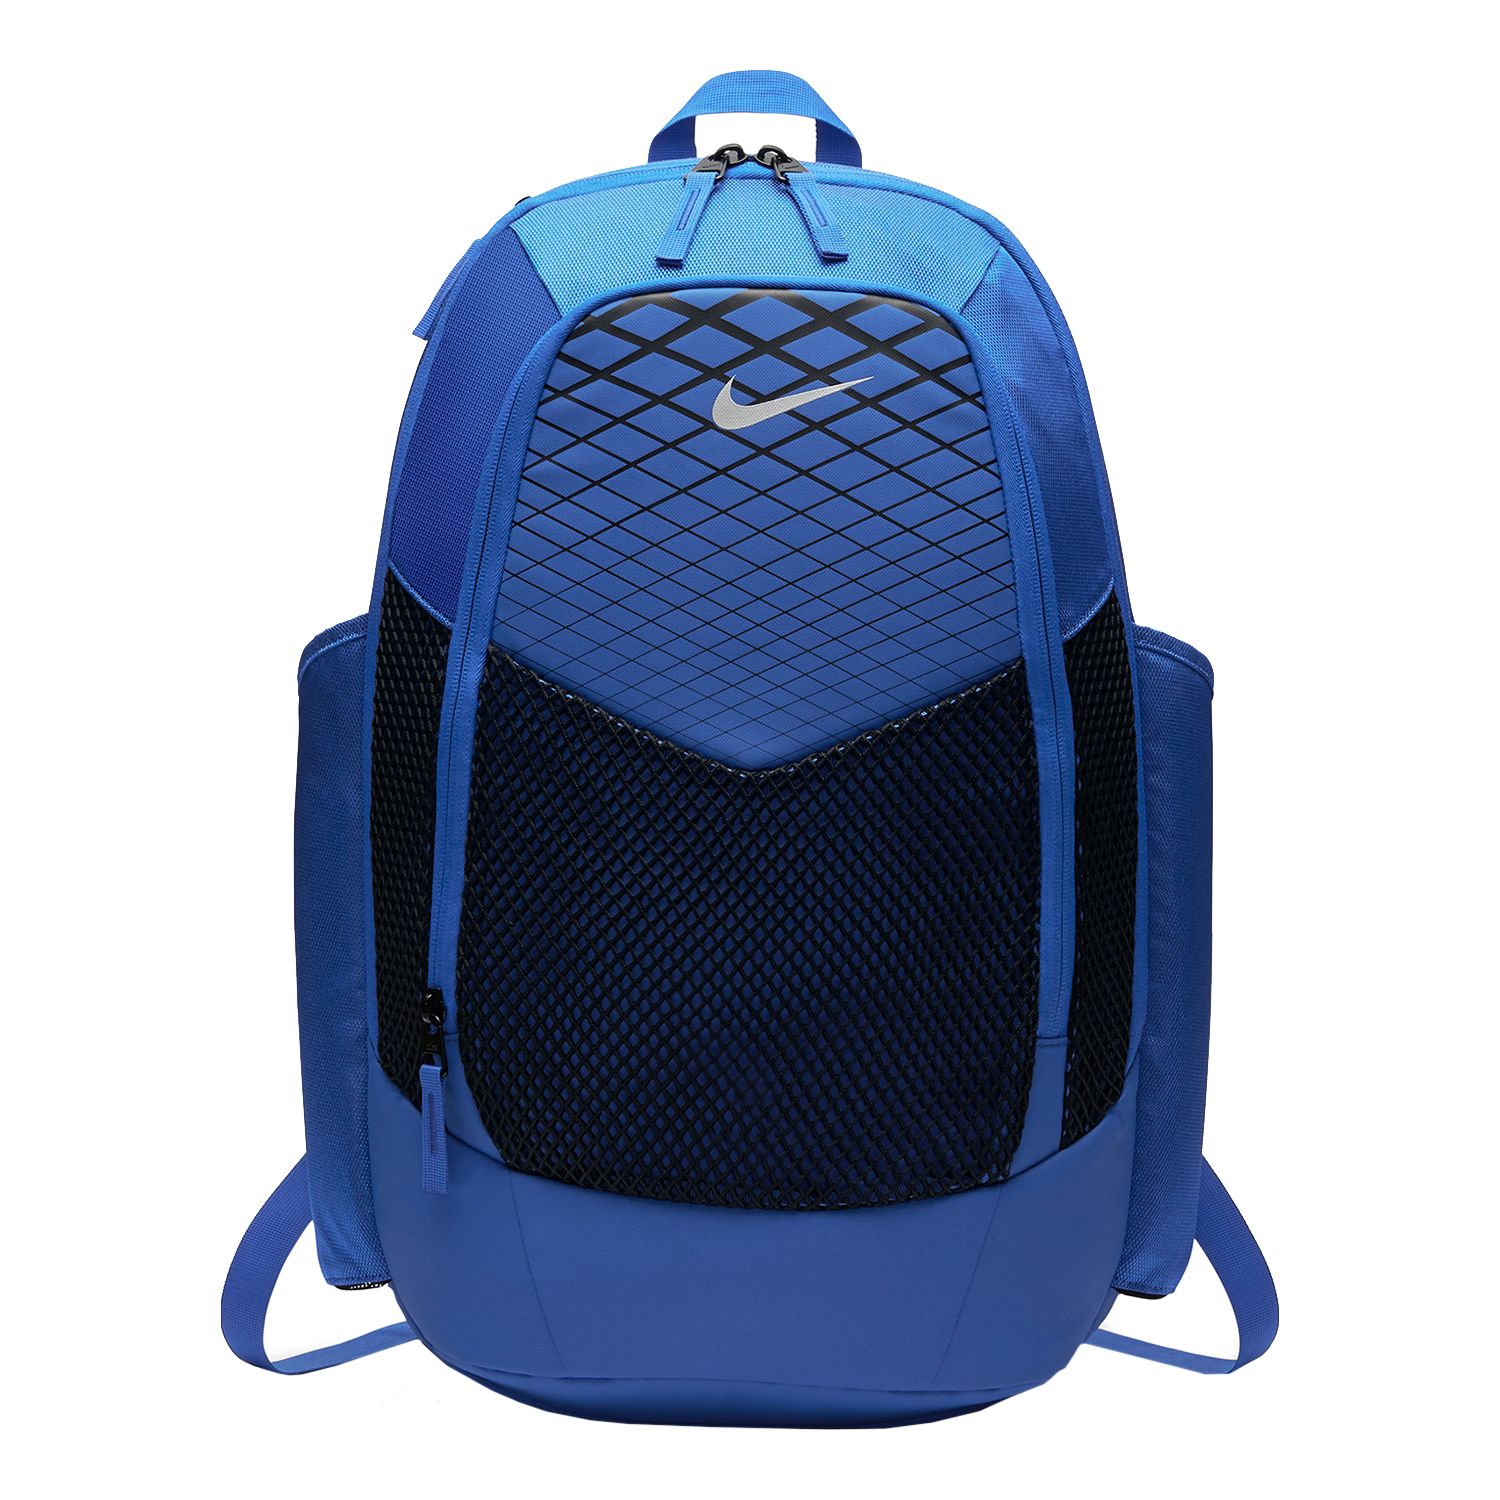 nike vapor backpack blue